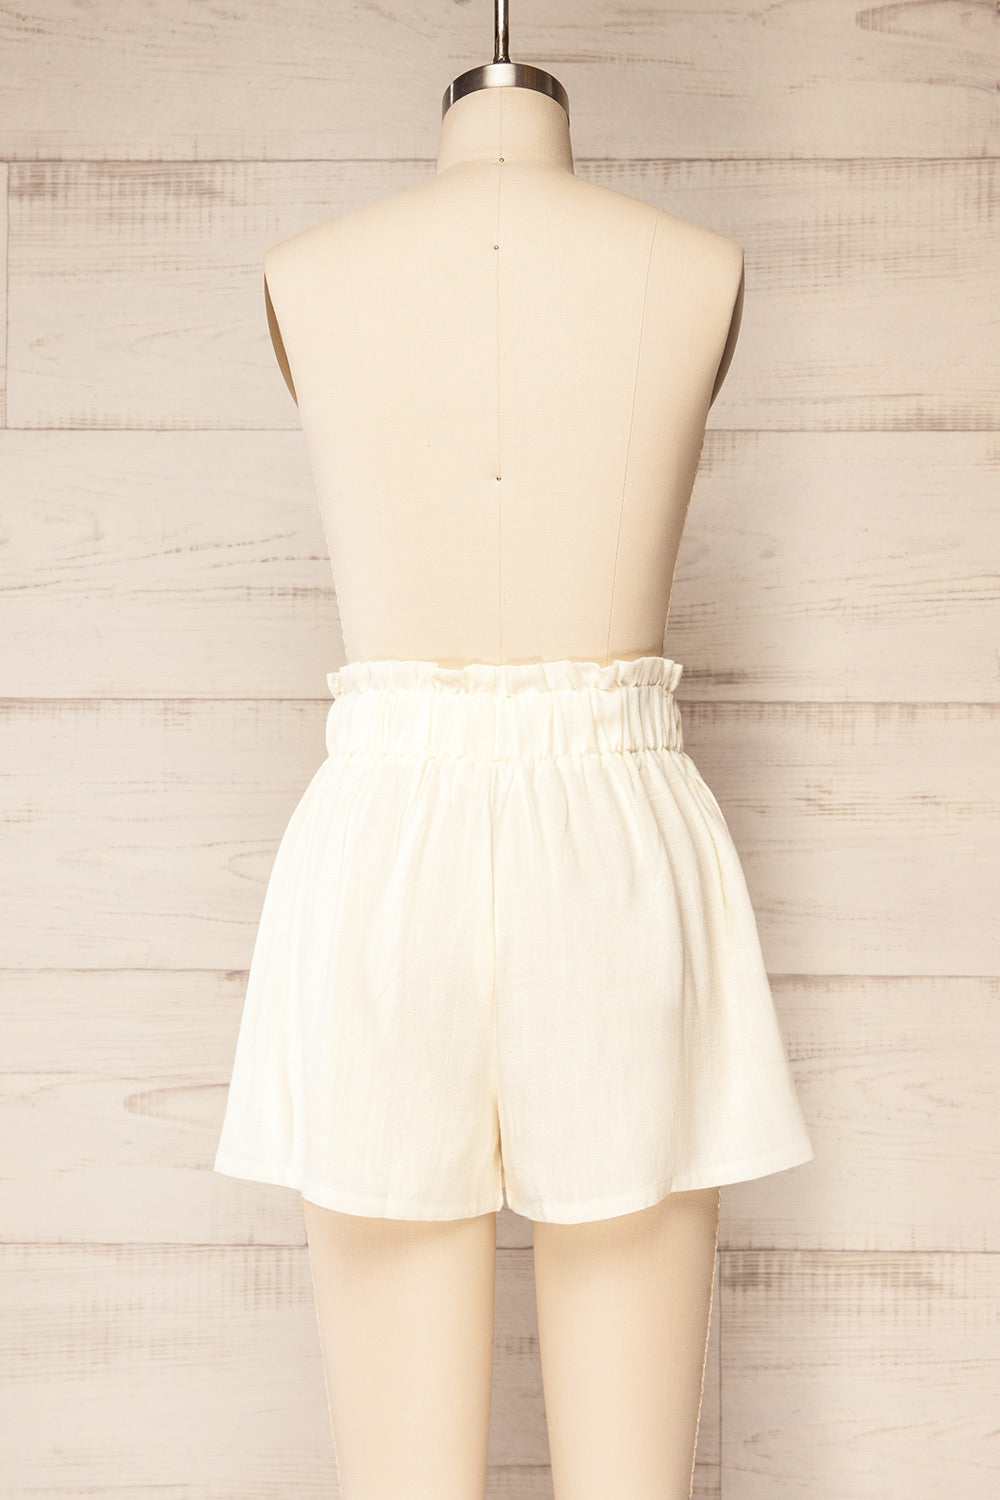 Hatherleigh Ivory Loose Shorts w/ Elastic Waist | La petite garçonne back view